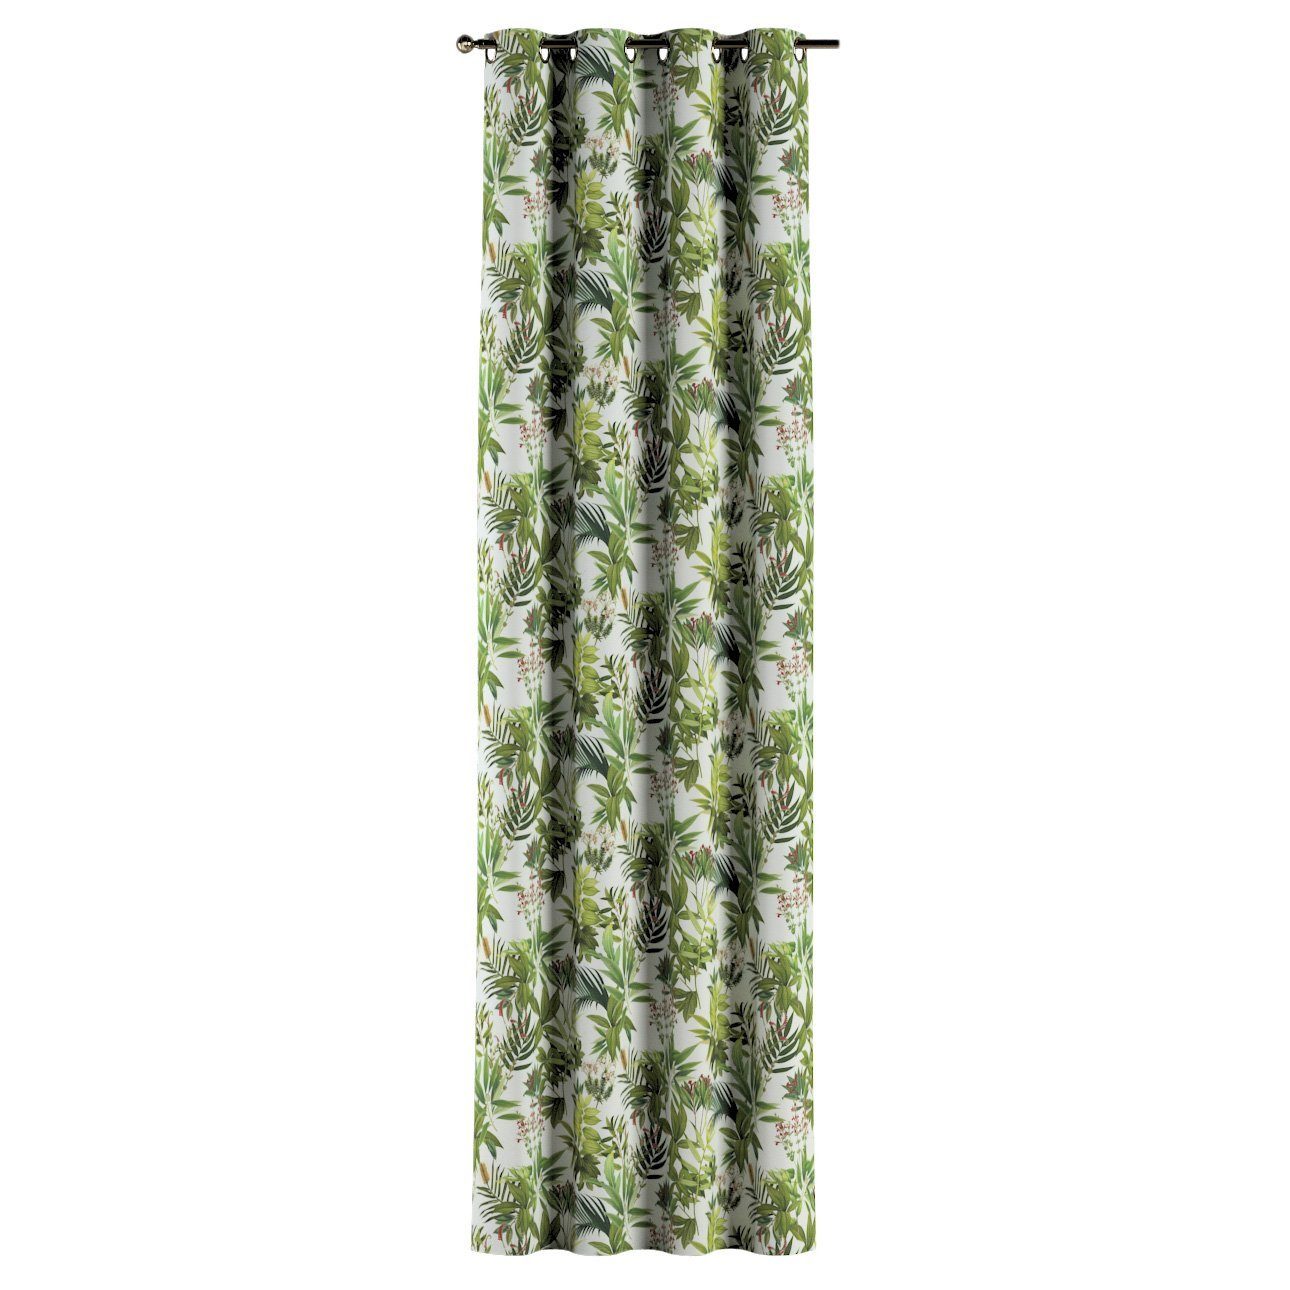 Vorhang Ösenschal 130 x 100 Dekoria grün-weiß Island, Tropical cm